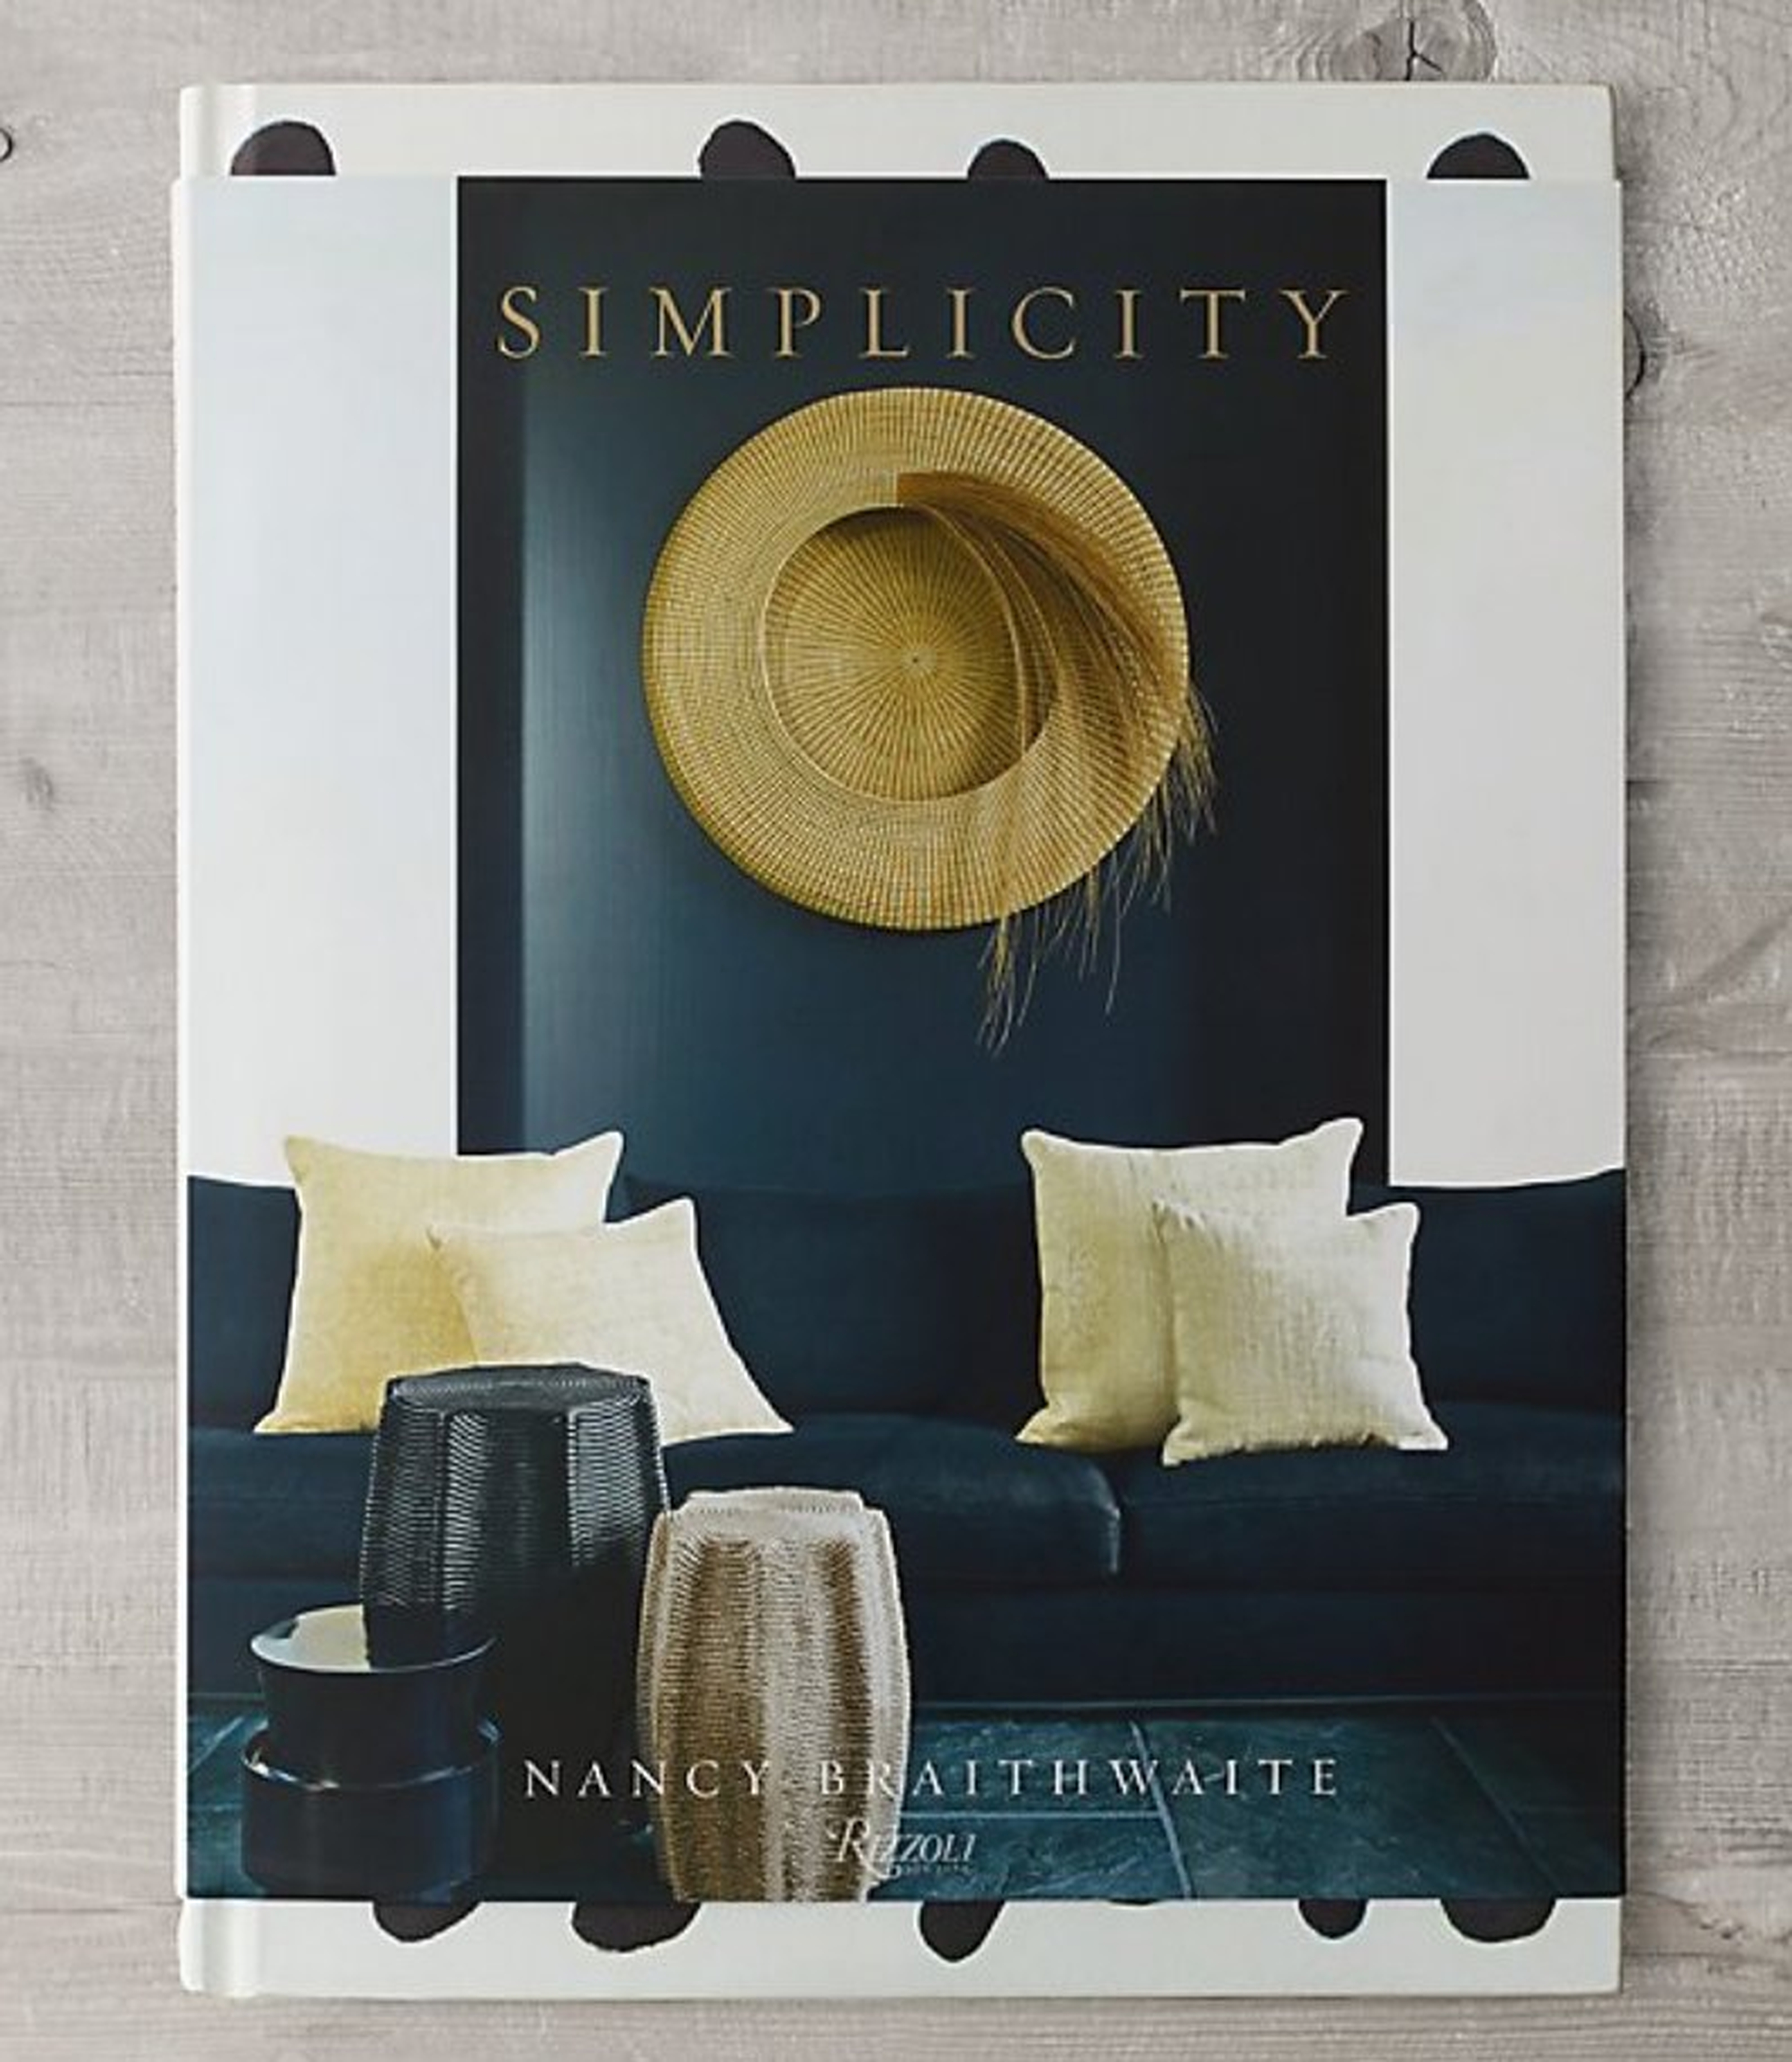 NANCY BRAITHWAITE: SIMPLICITY - RH